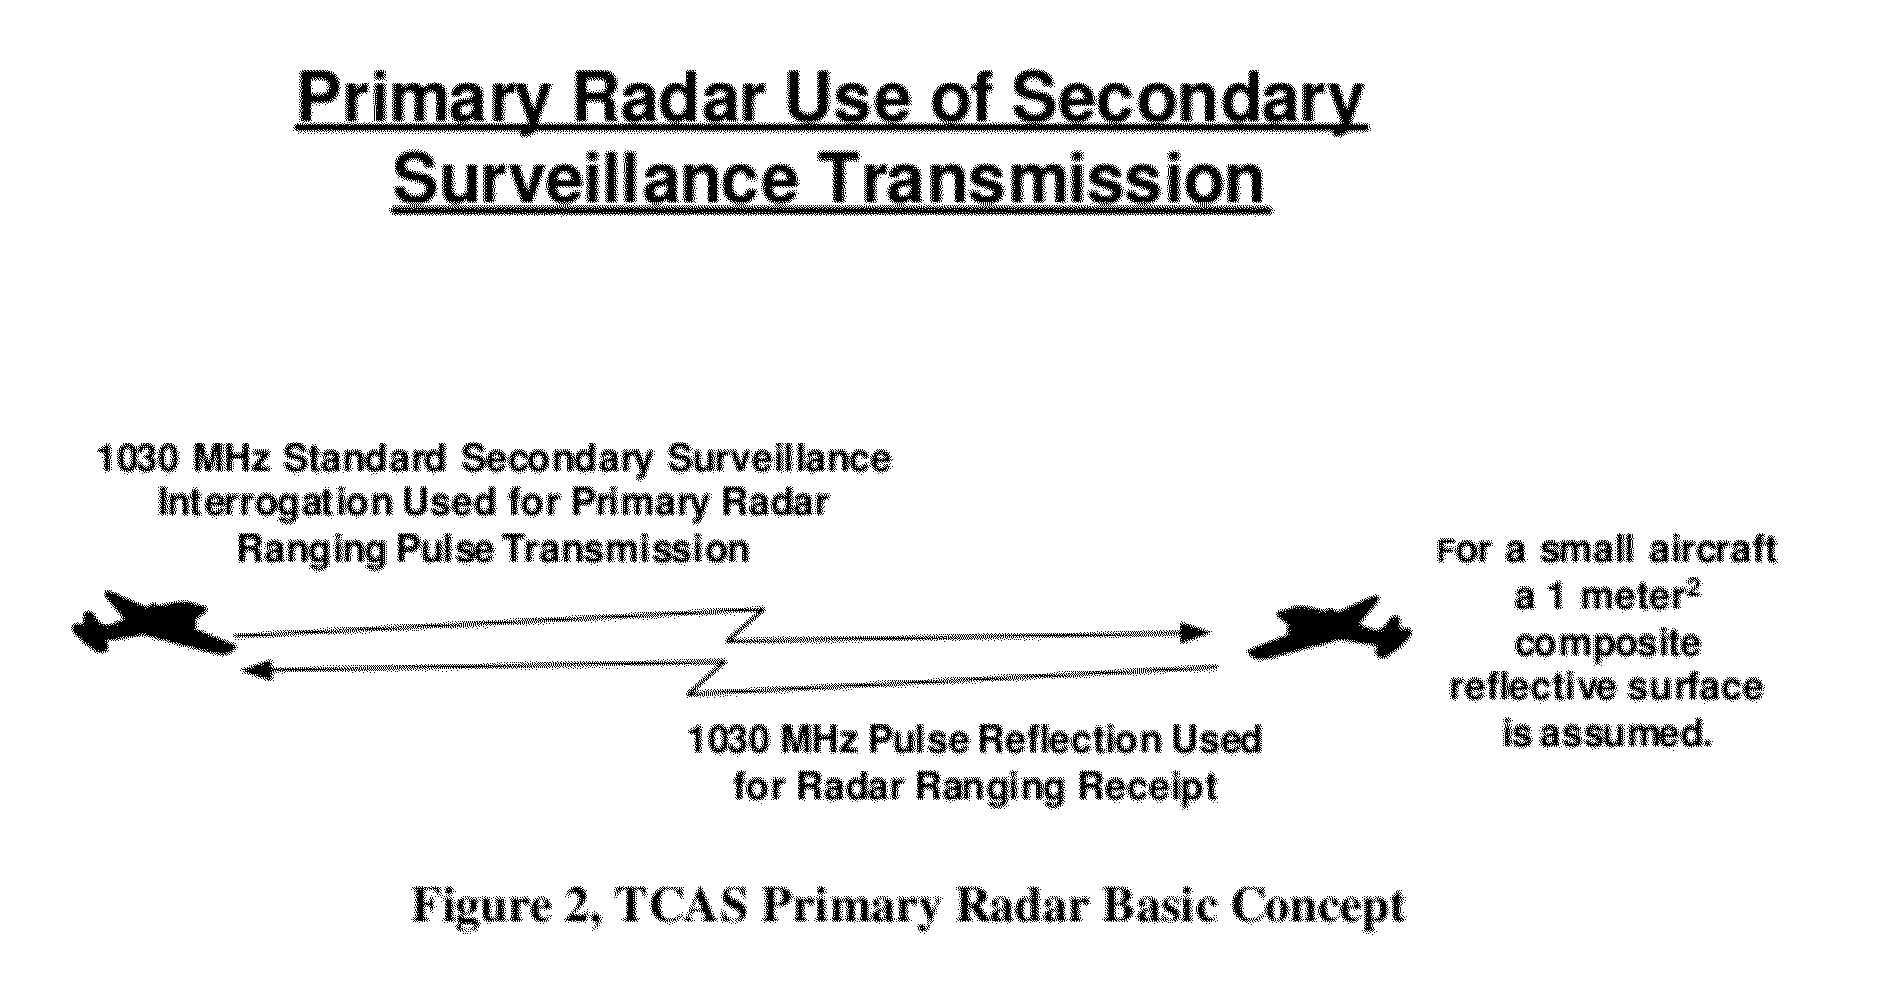 Systems and methods of providing a tcas primary radar